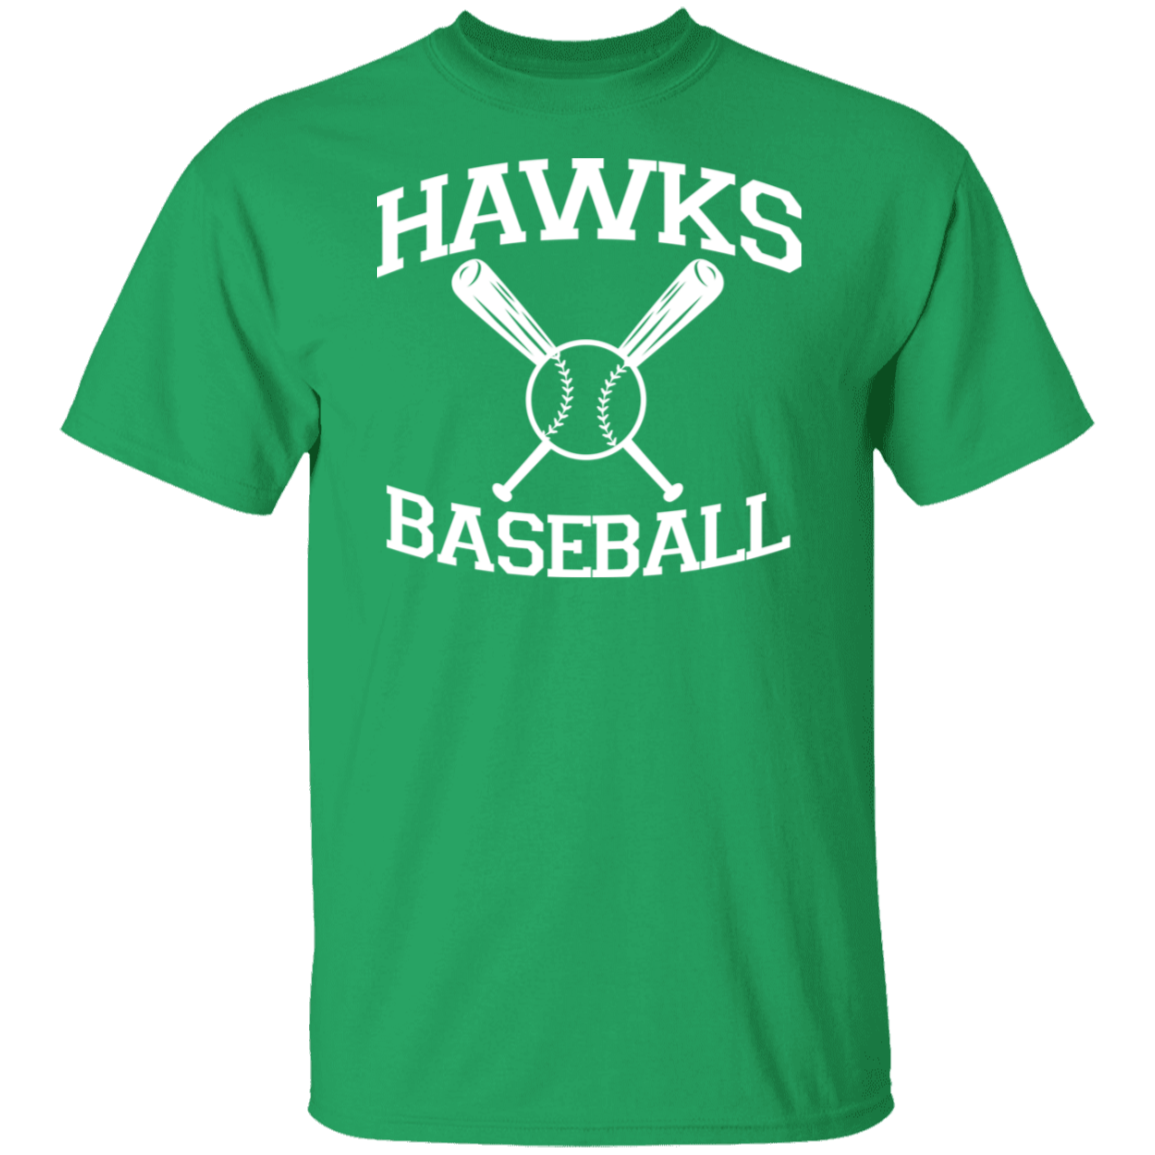 Hawks Baseball White Print T-Shirt